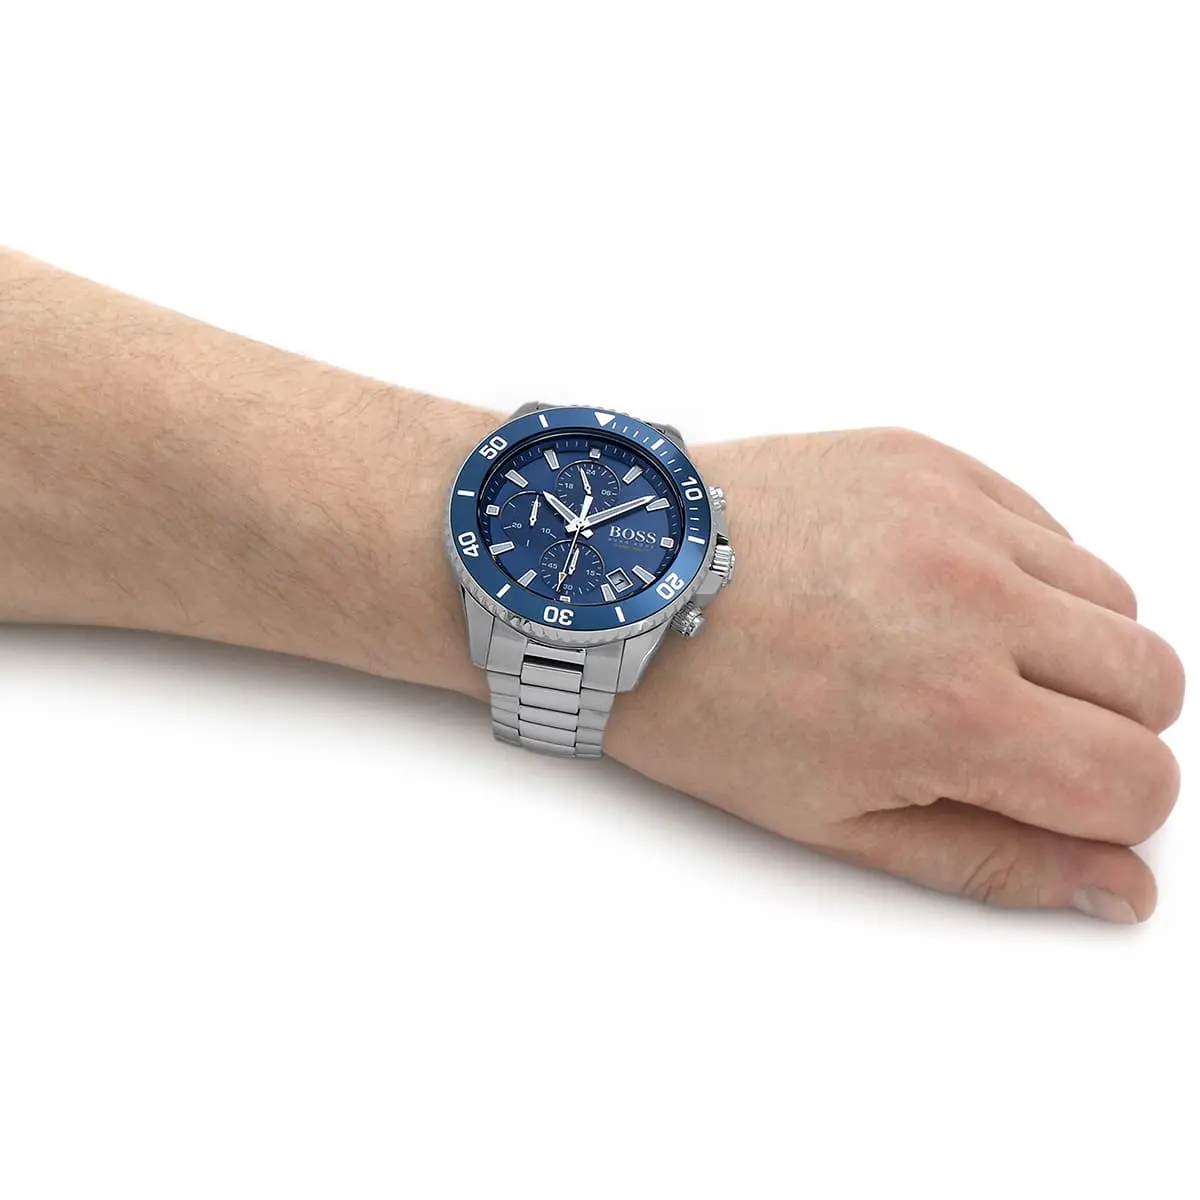 Hugo Boss Men's Watch Admiral 1513907 | Watches Prime